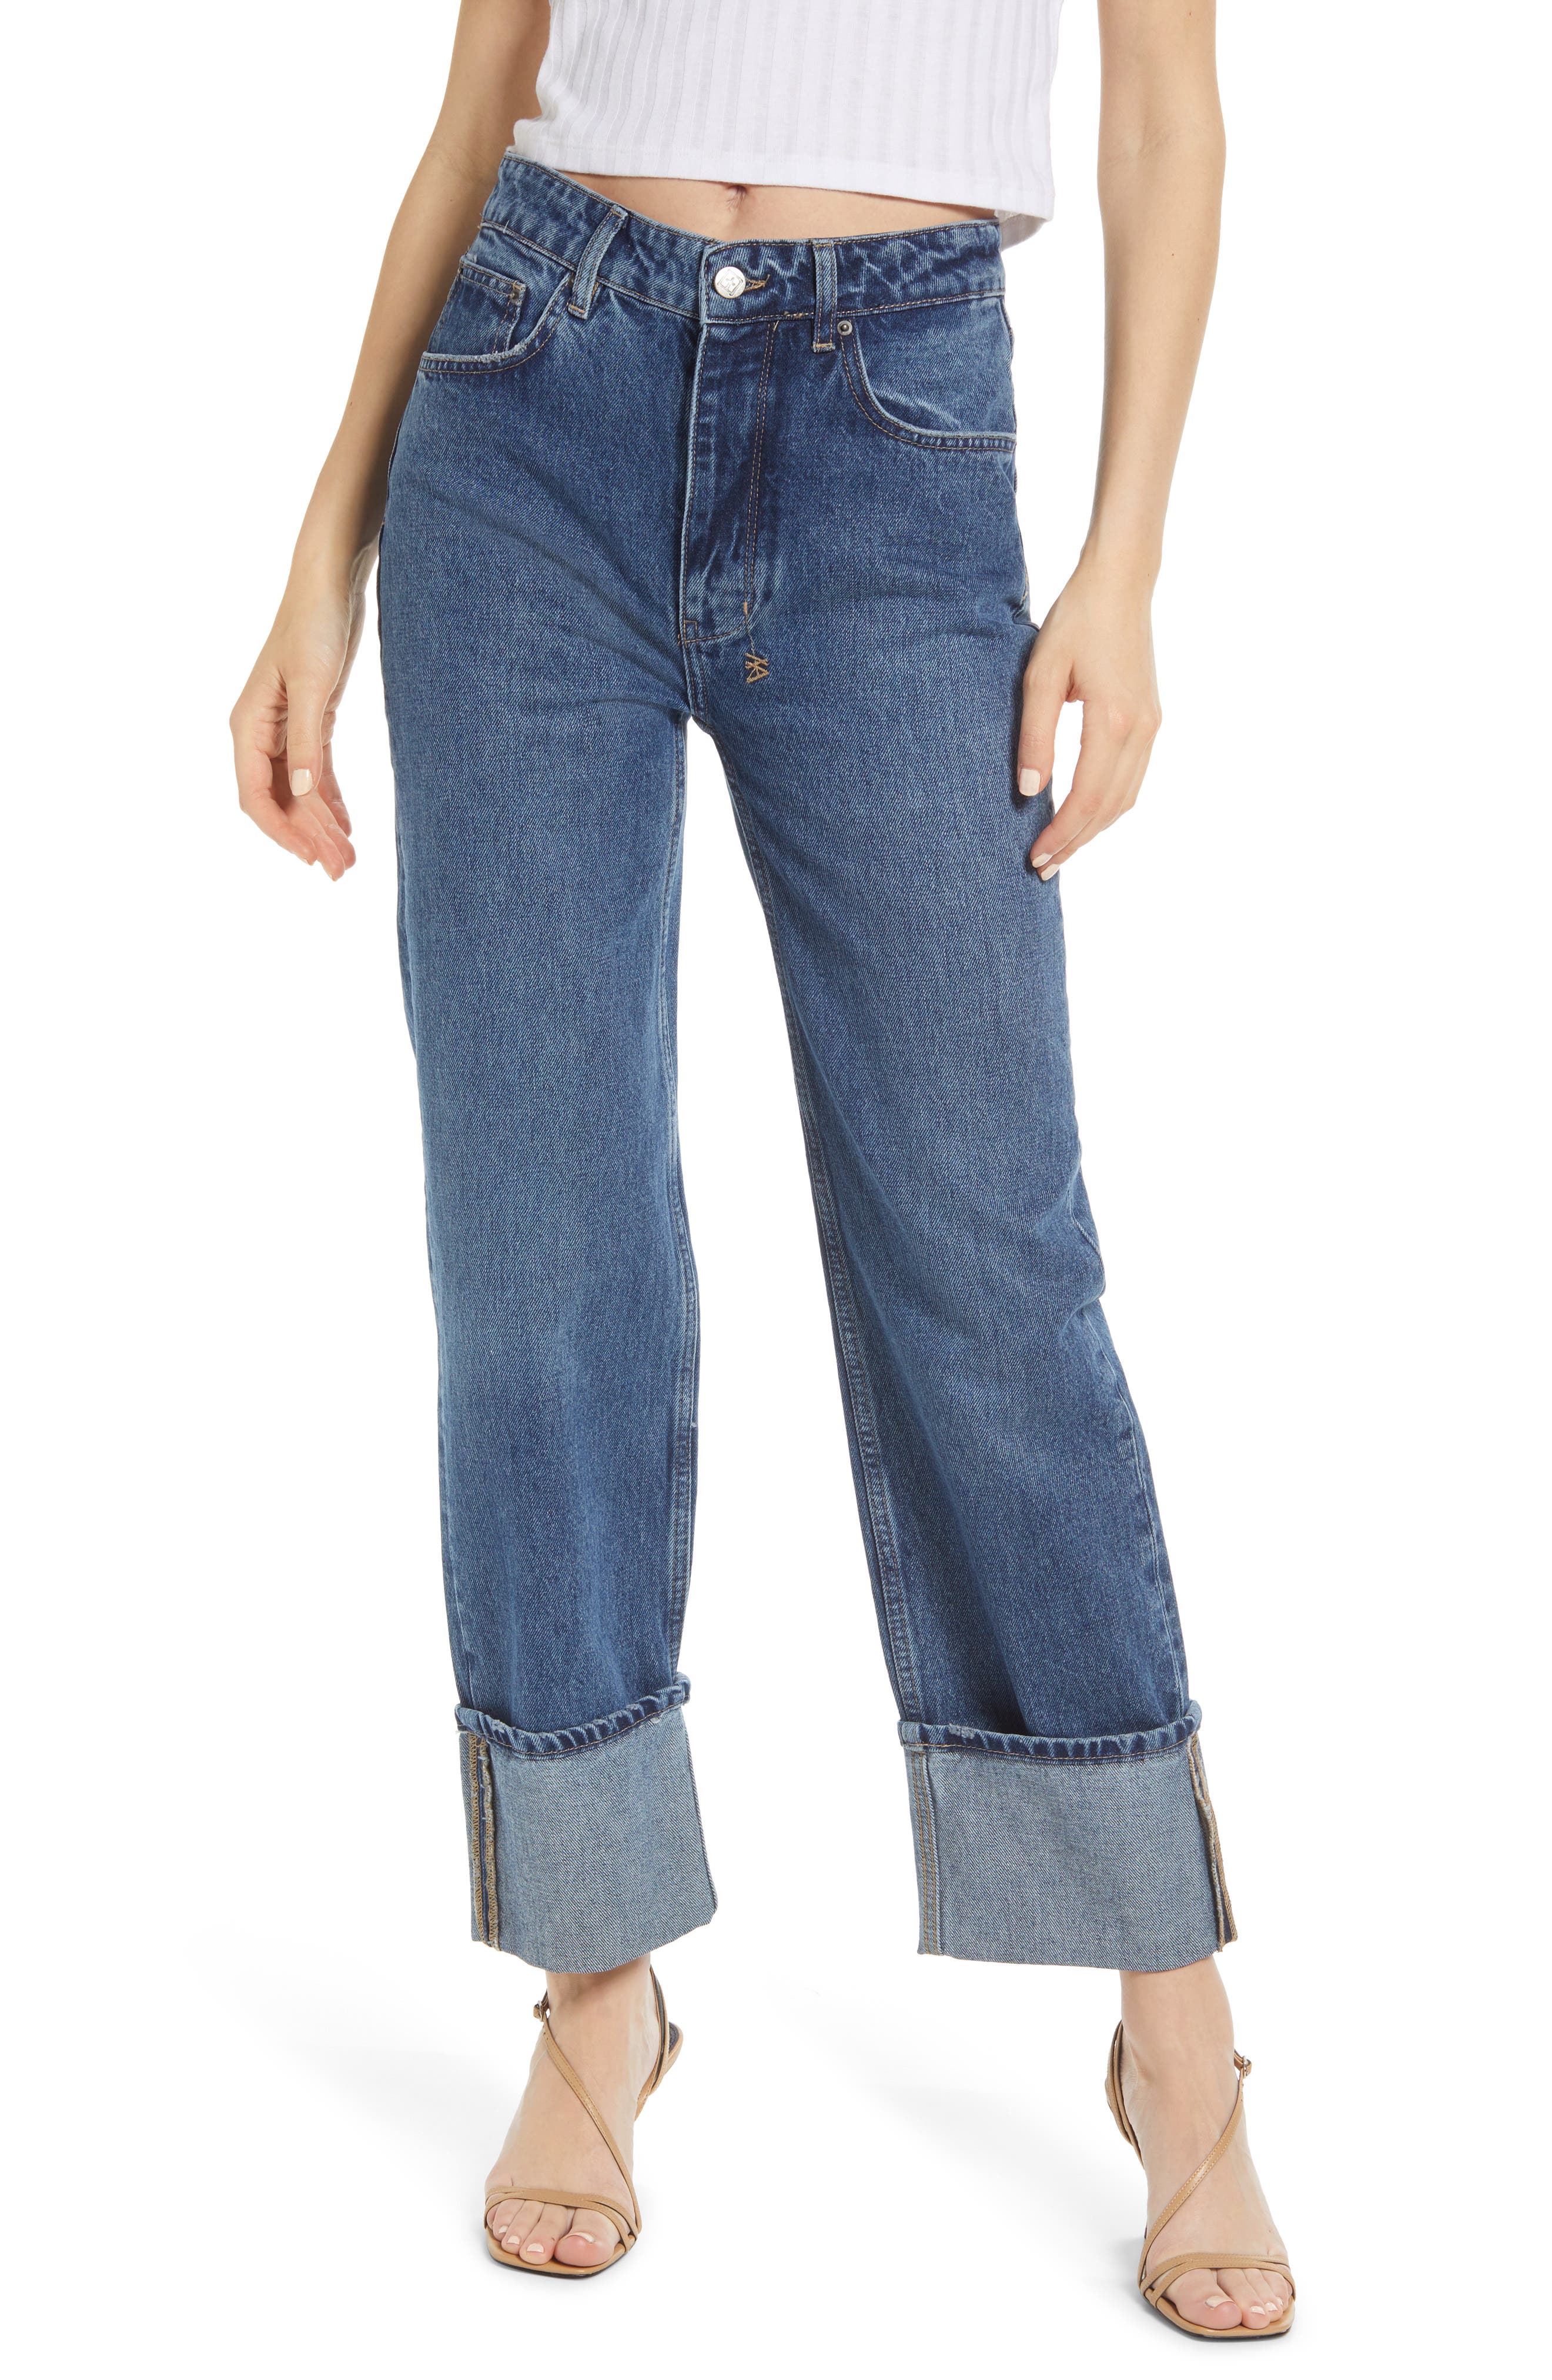 Ksubi Brooklyn Straight Leg Jeans in Denim at Nordstrom, Size 26